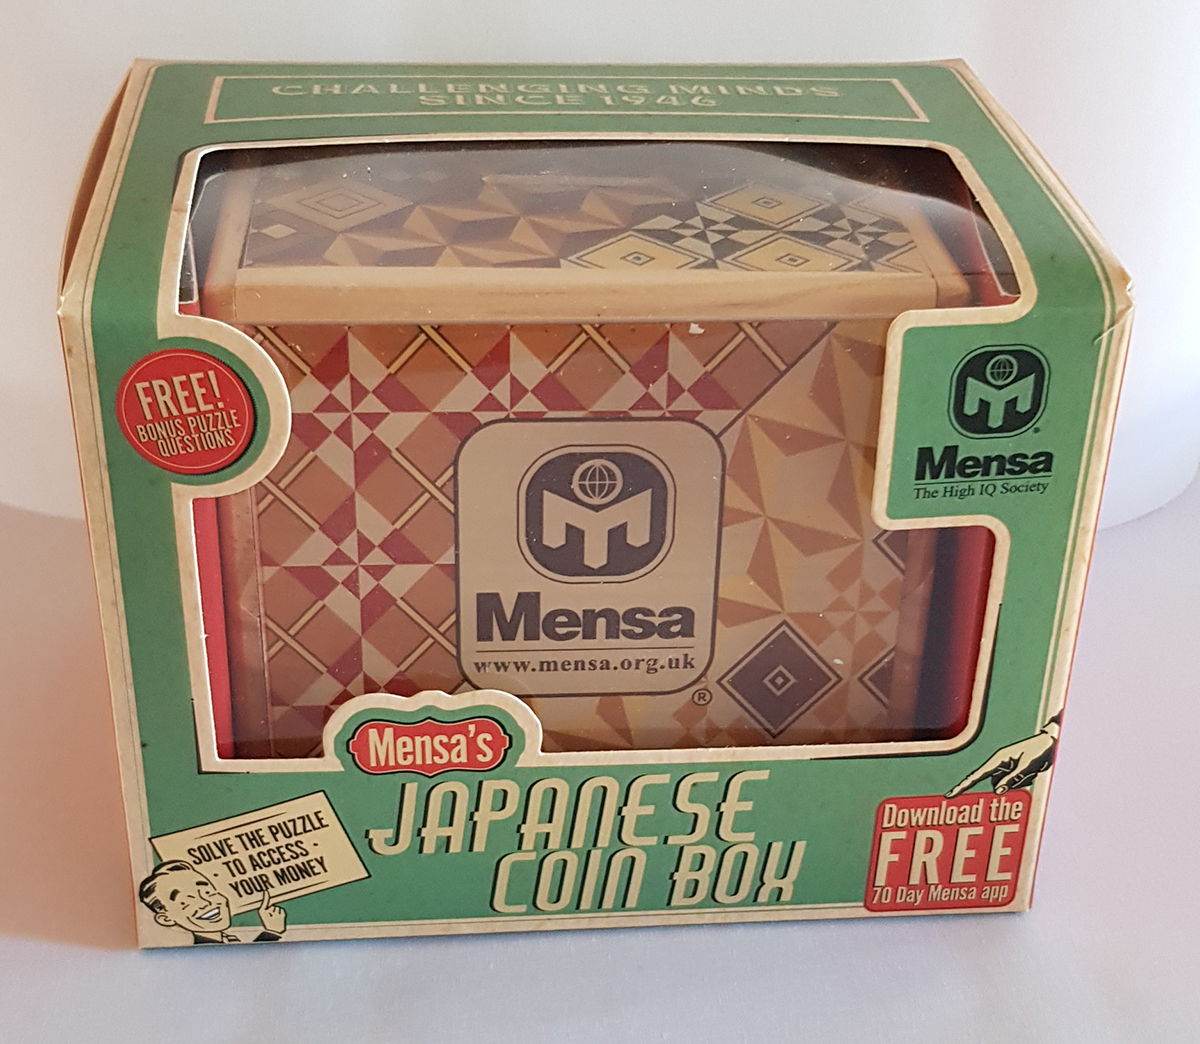 Mensa - Japanese coin box